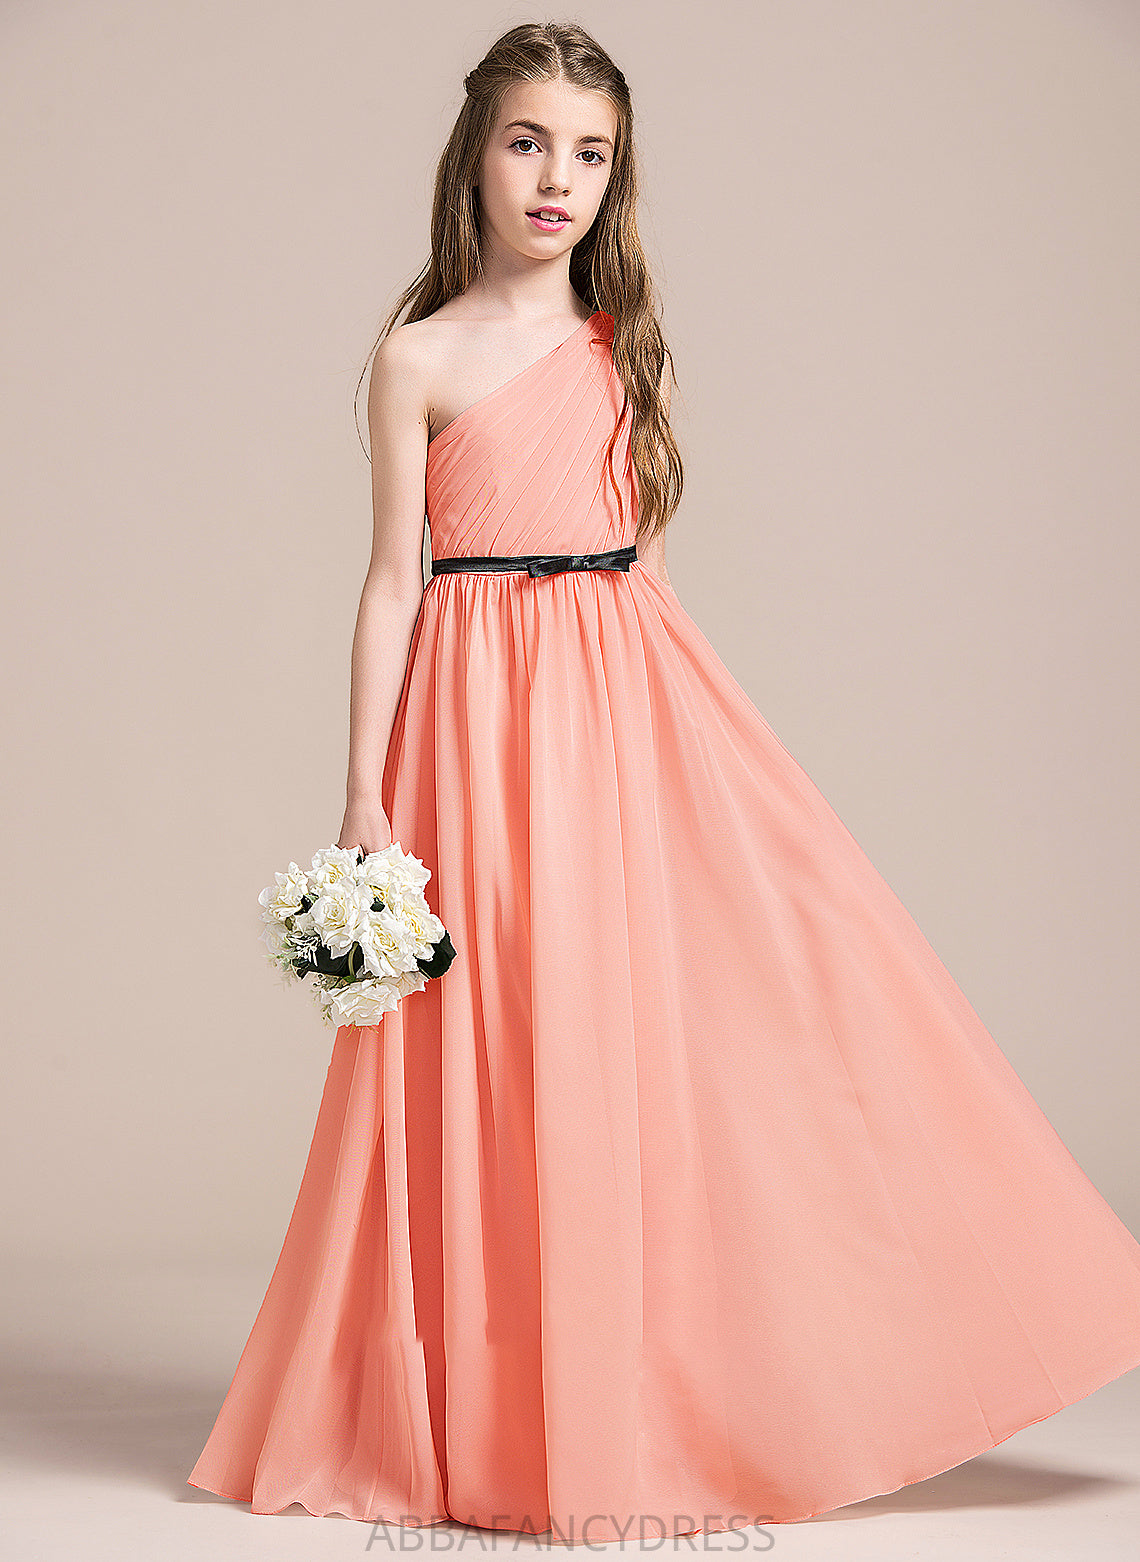 A-Line With Kara Junior Bridesmaid Dresses Floor-Length Bow(s) Ruffle Chiffon One-Shoulder